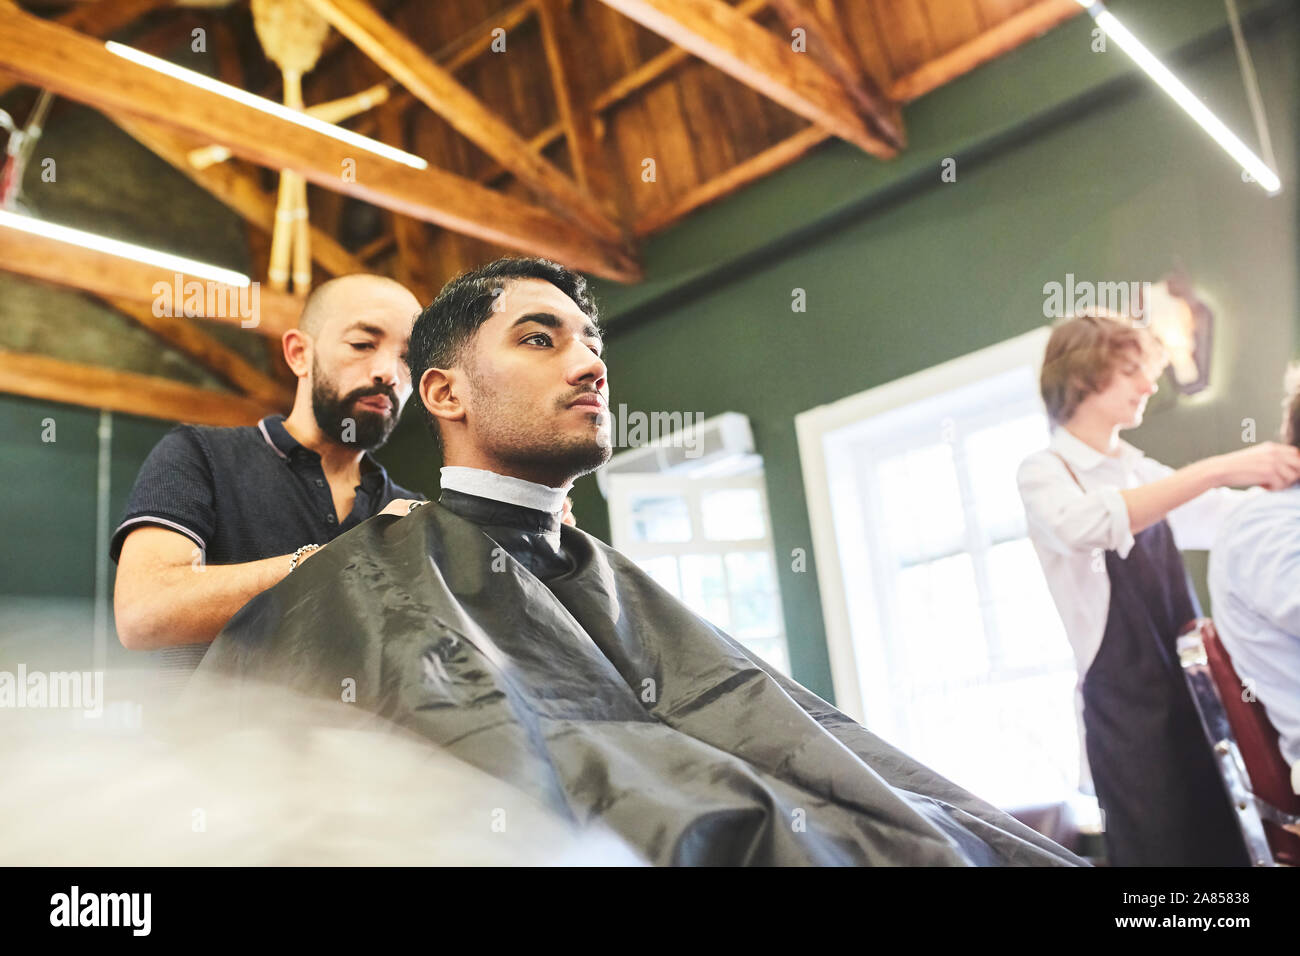 Männliche Kunde bekommt einen Haarschnitt in Barbershop Stockfoto